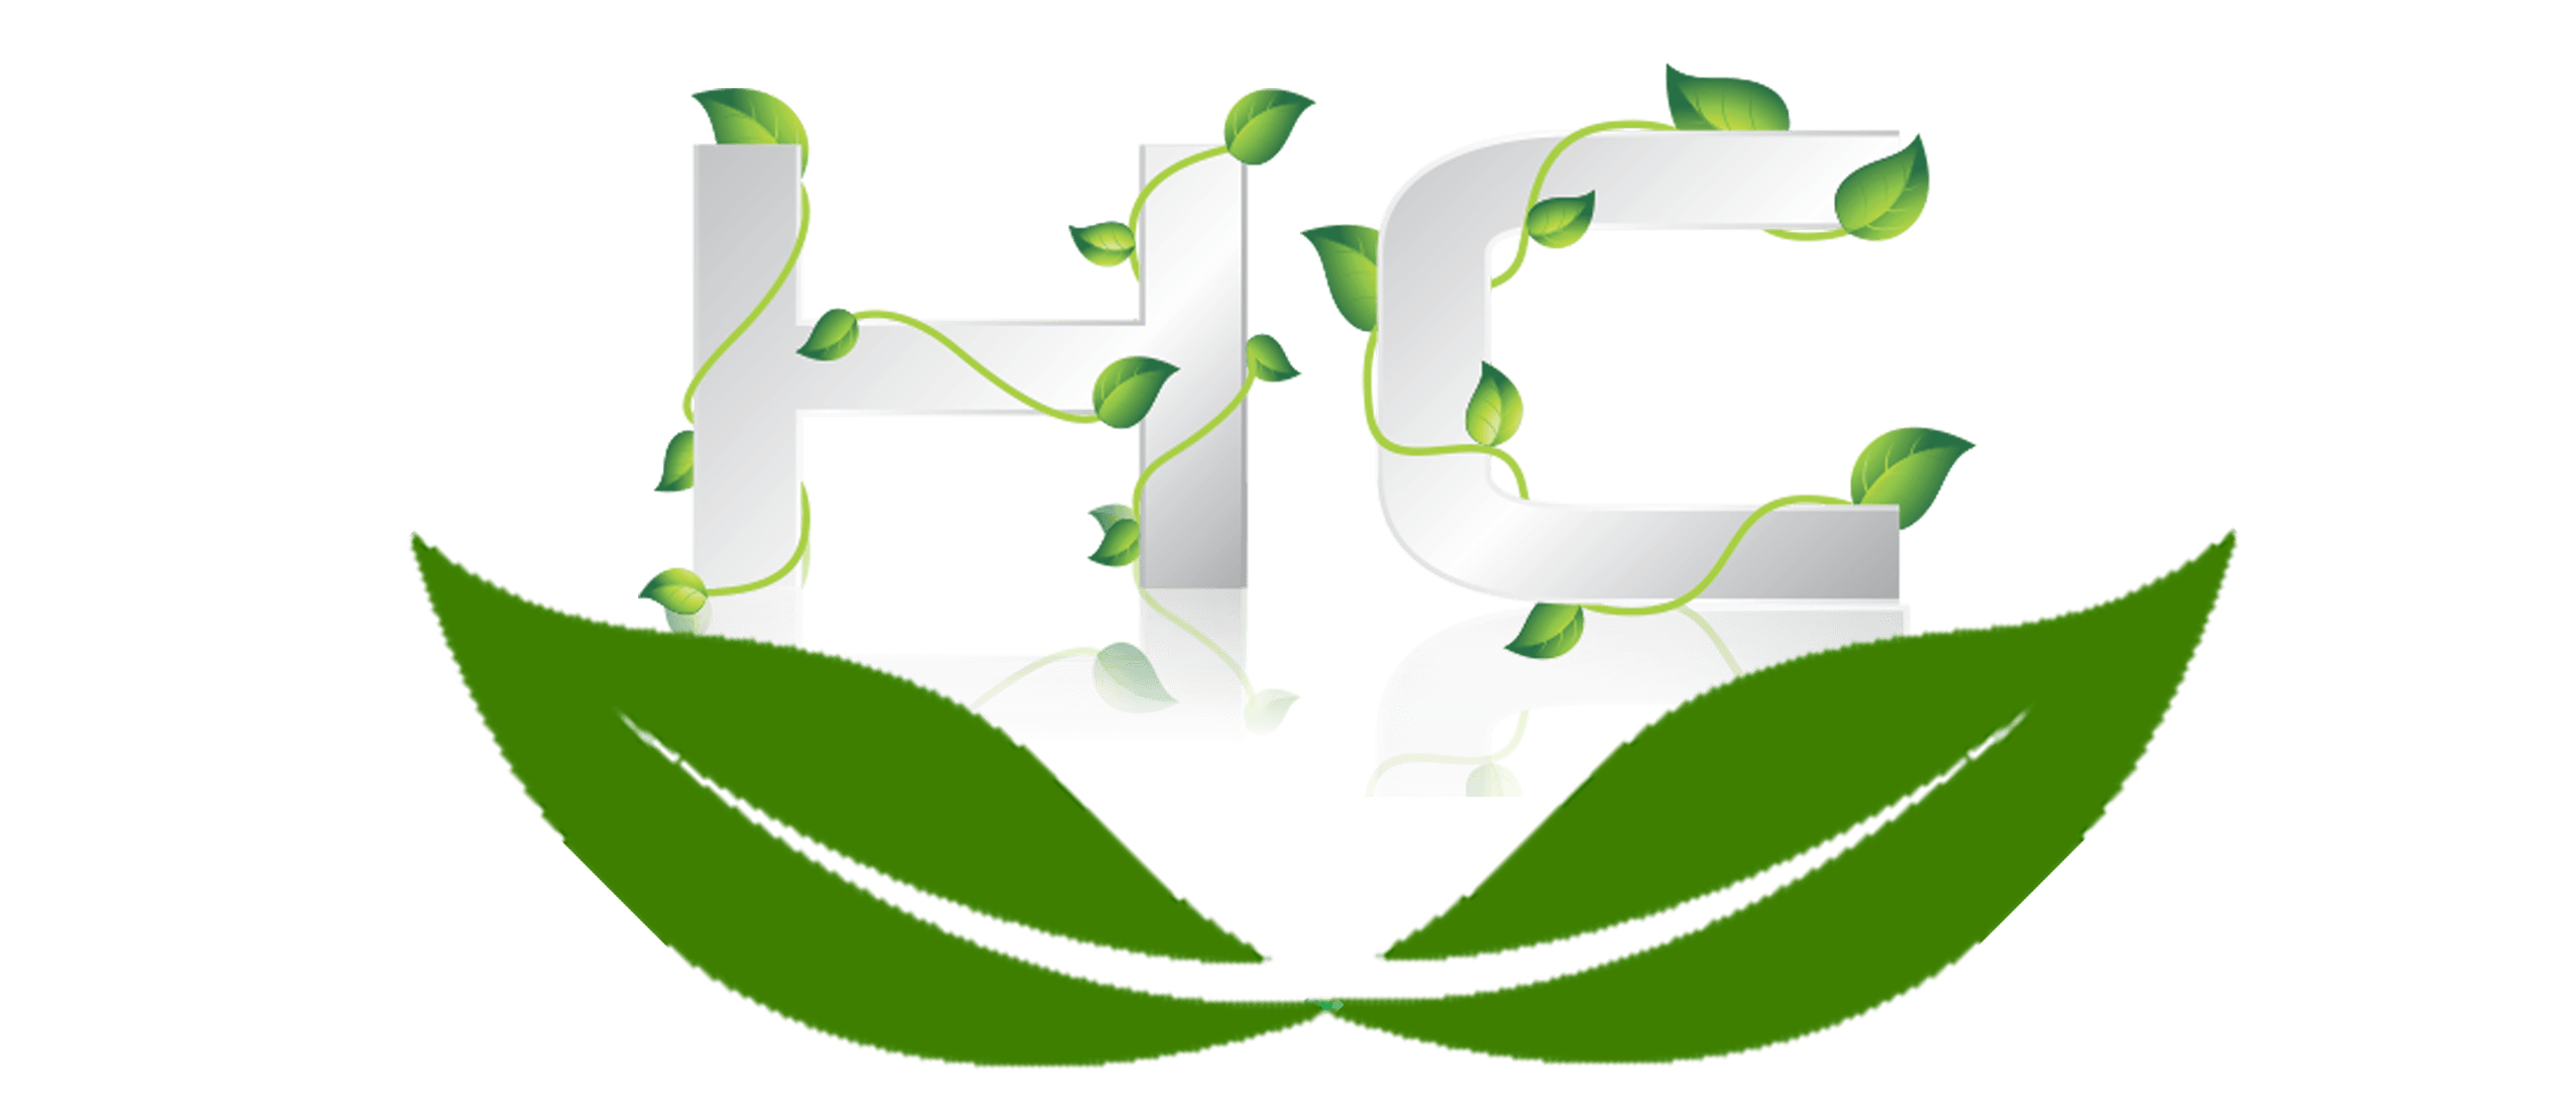 HC1 Logo - hc1 logo | Bluefox design | Design, Logos